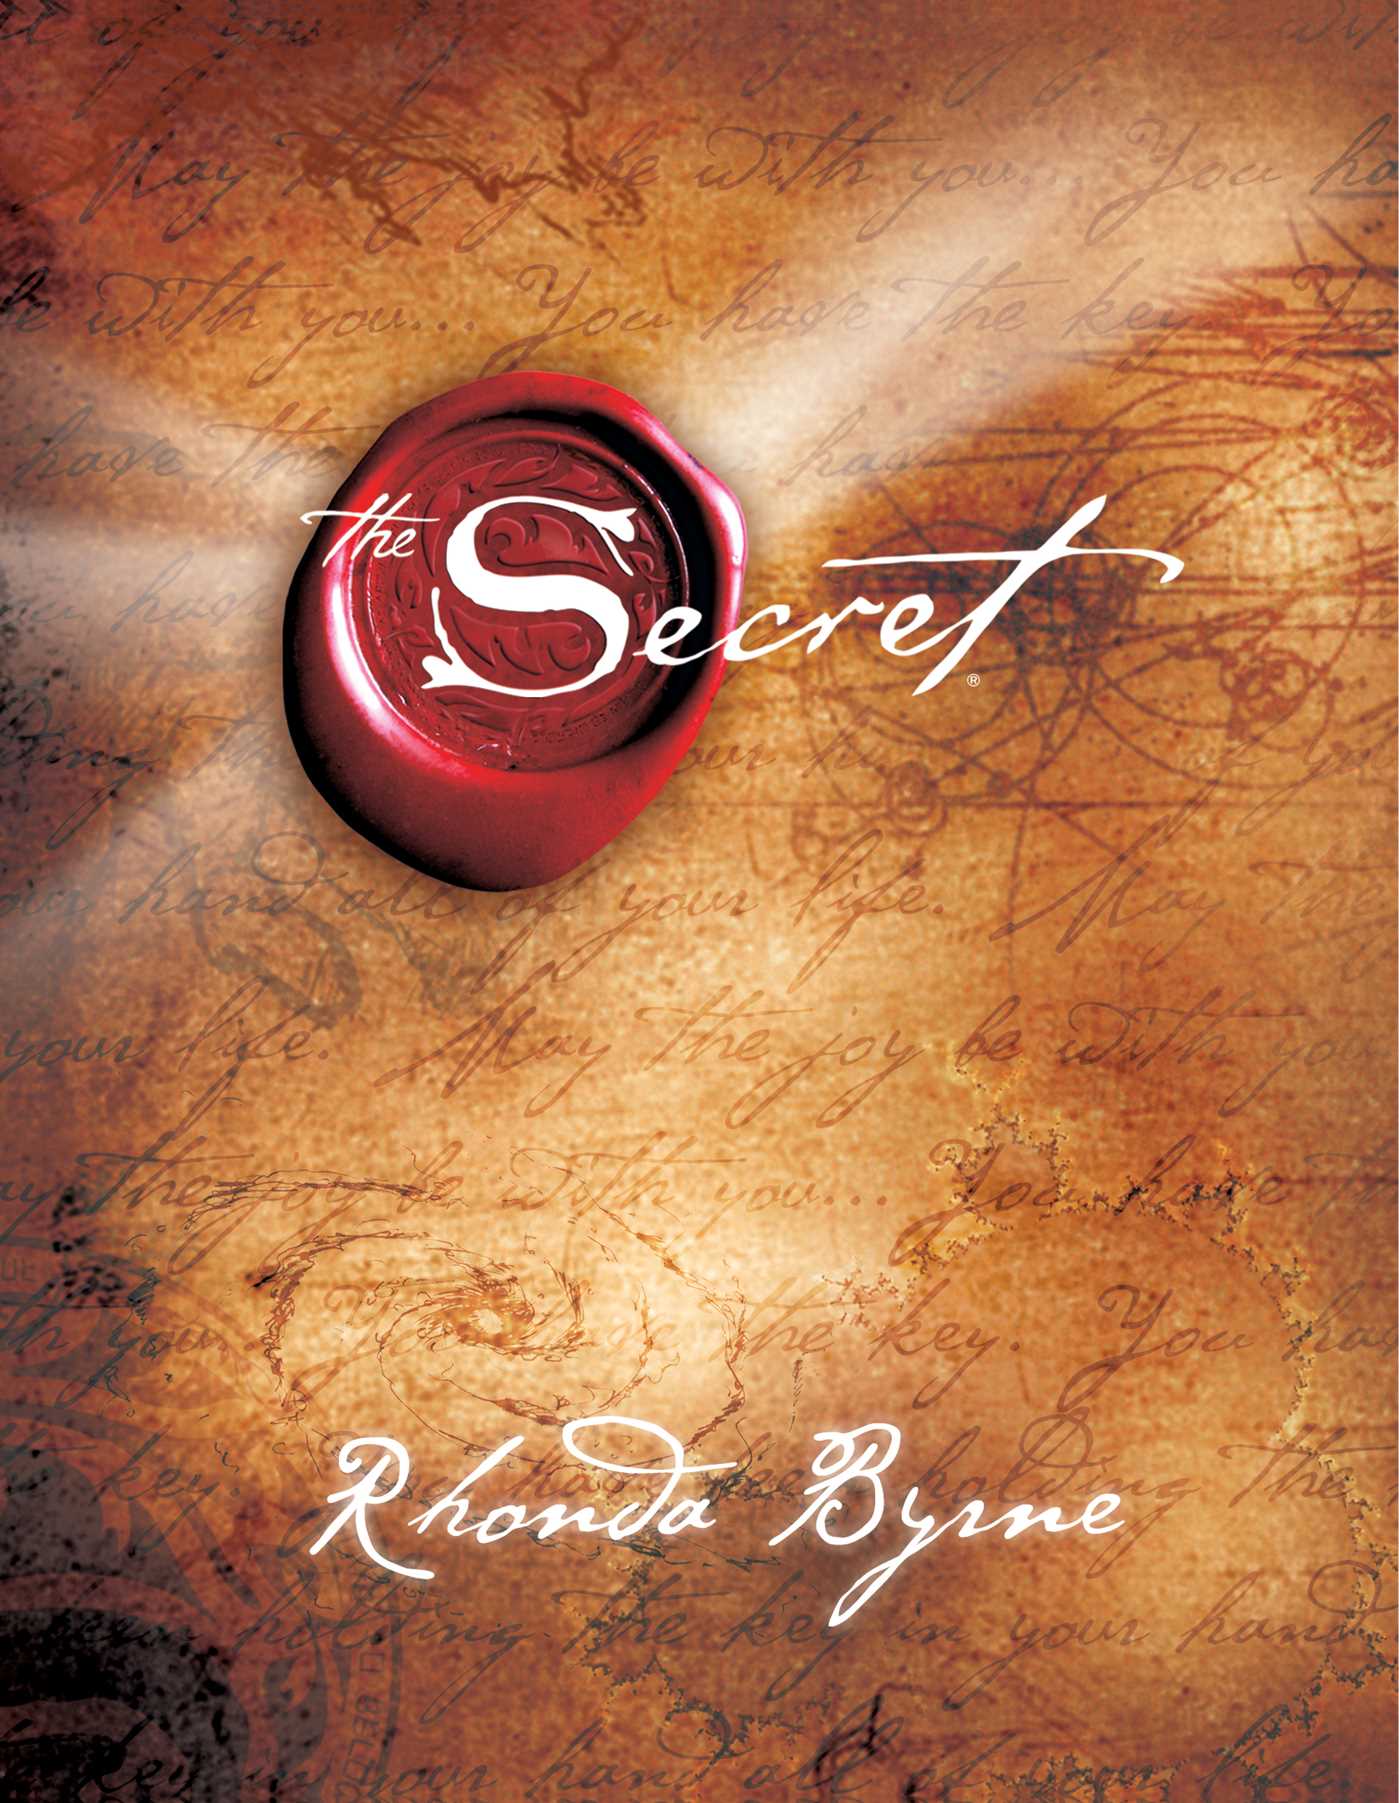 4. 'The Secret' Rhonda Byrne